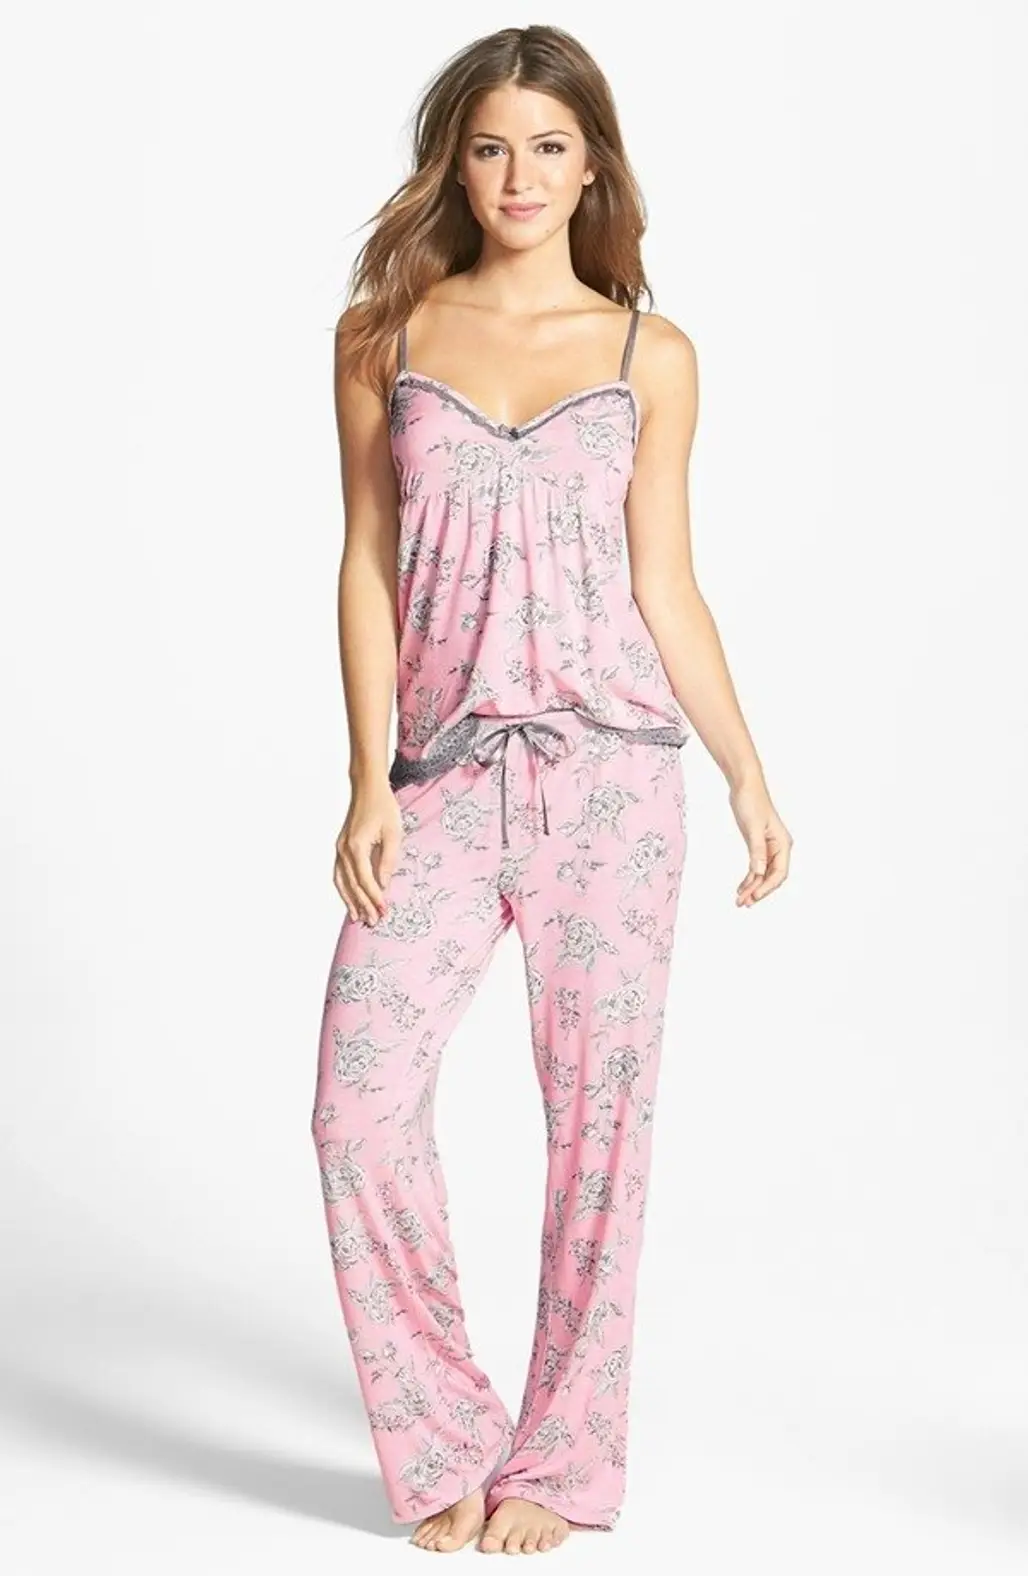 Modal Essentials Lace Trim Camisole Pajamas by PJ Salvage